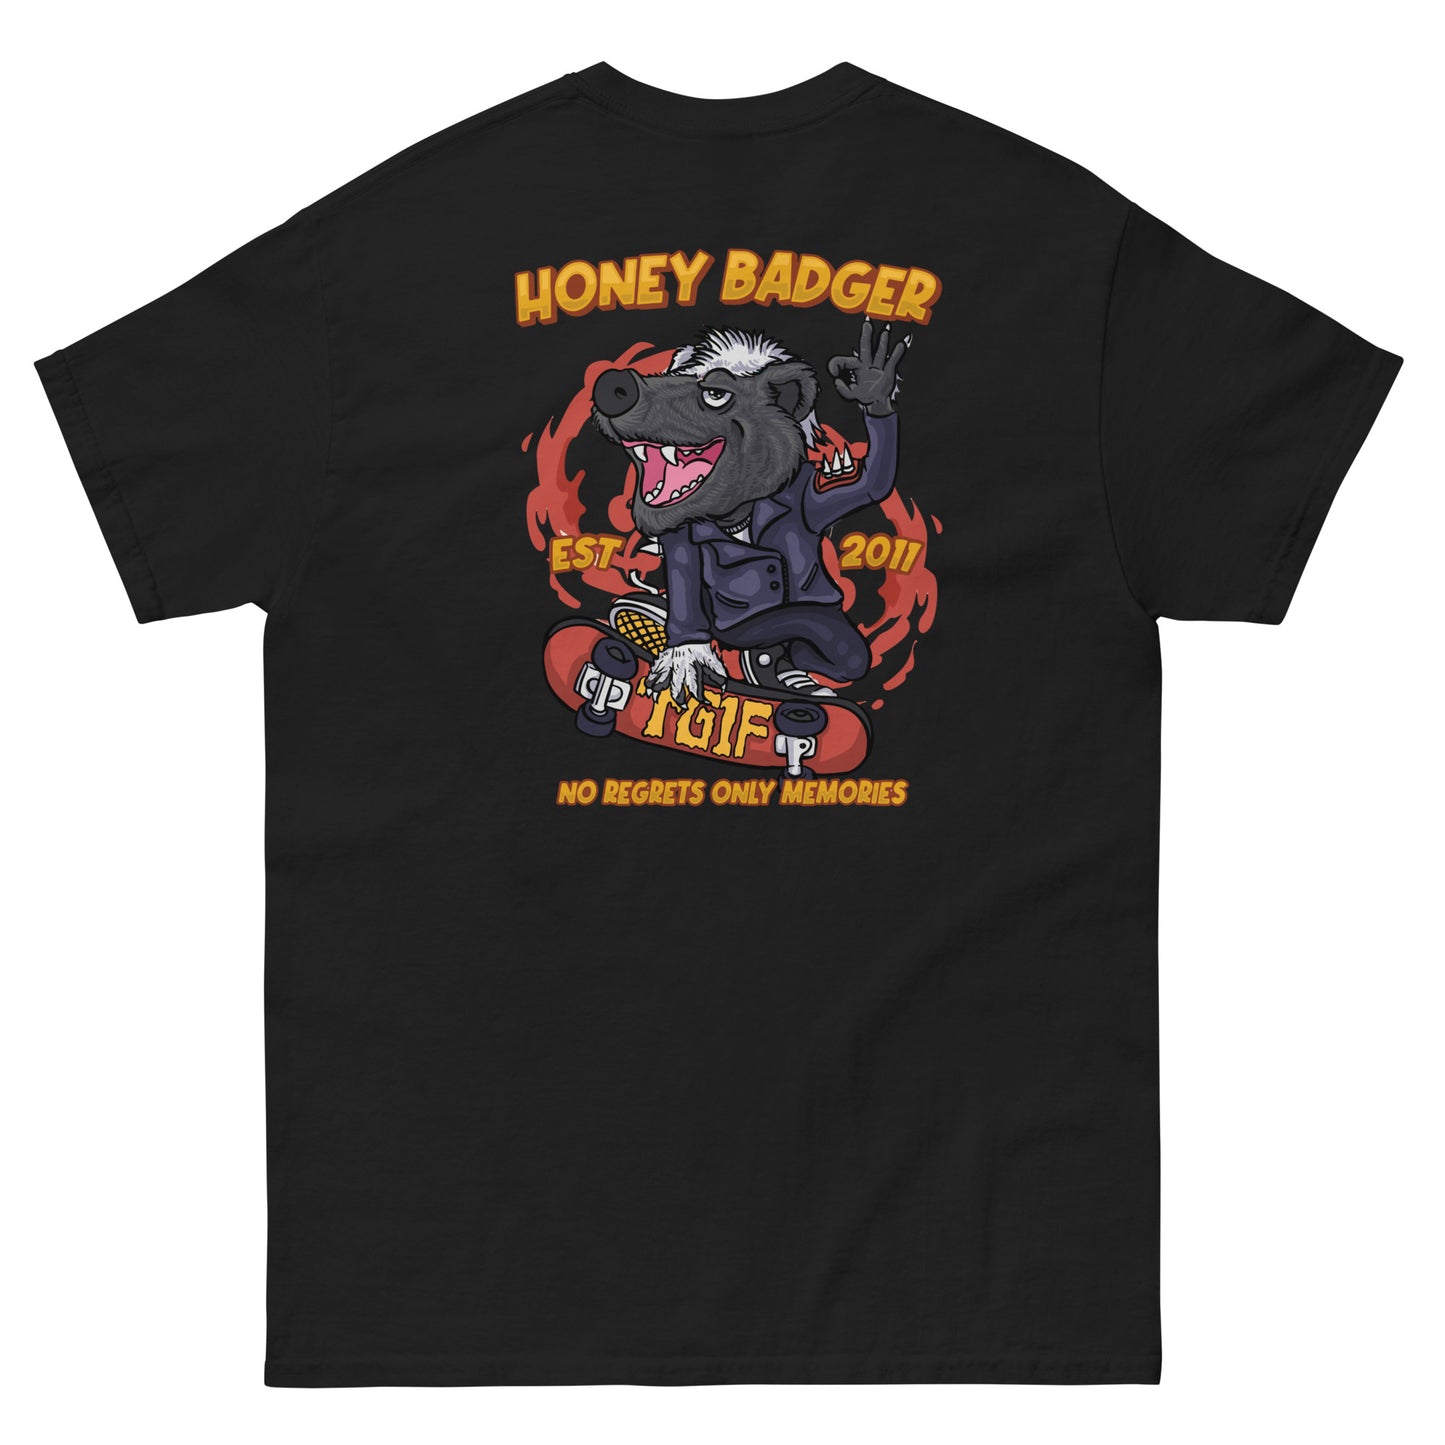 Daniel Ricciardo Honey Badger TG1F Shirt